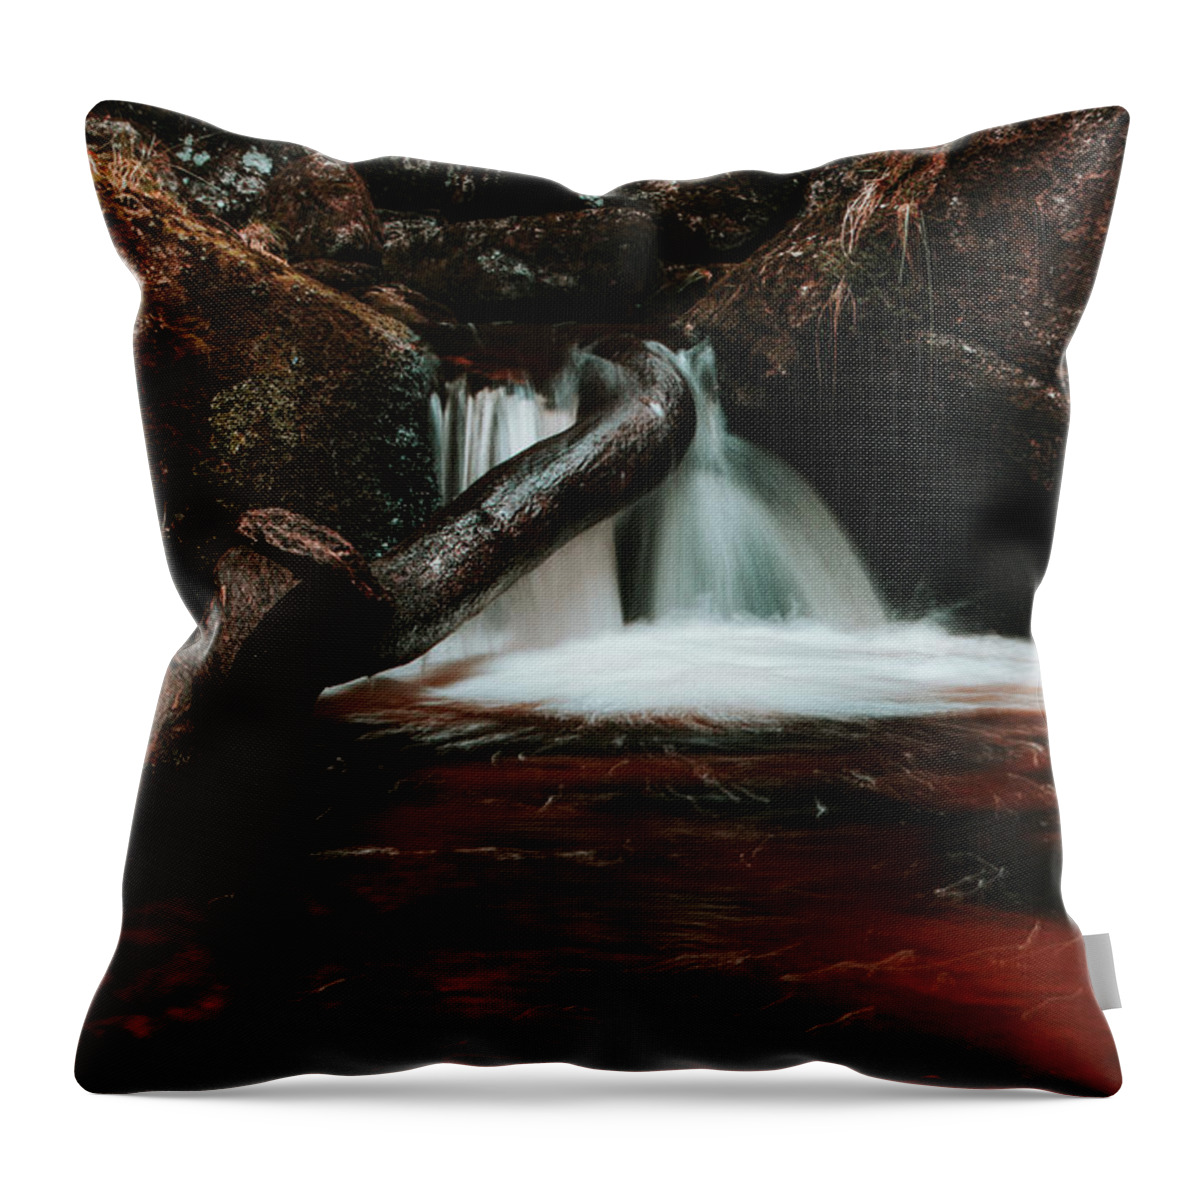 Jizera Mountains Throw Pillow featuring the photograph Colourful waterfall in the Jizera Mountains, Czech Republic by Vaclav Sonnek